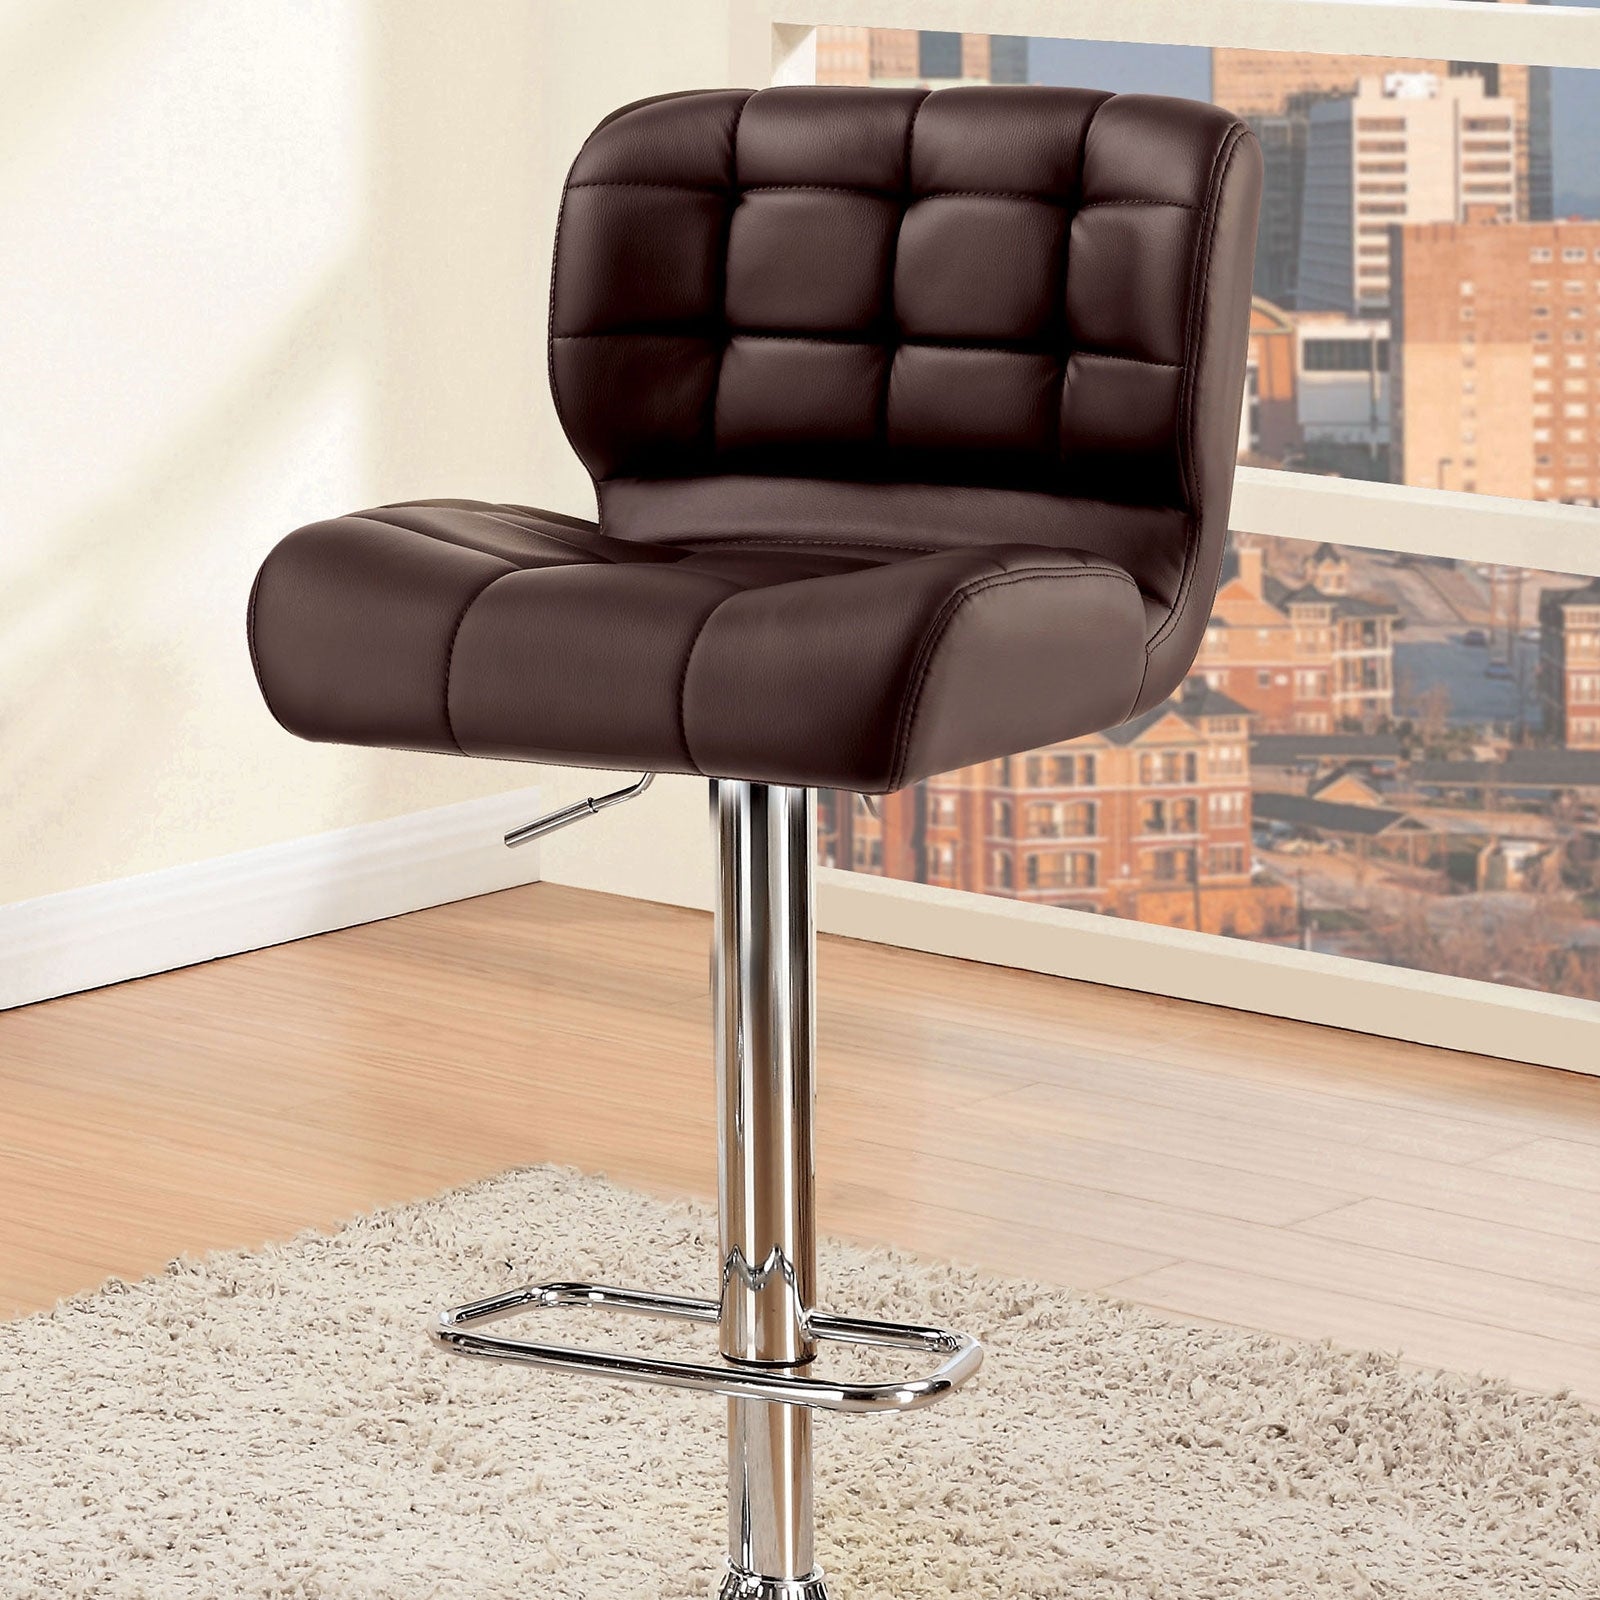 The Kori Brown Leatherette & Chrome Barstool